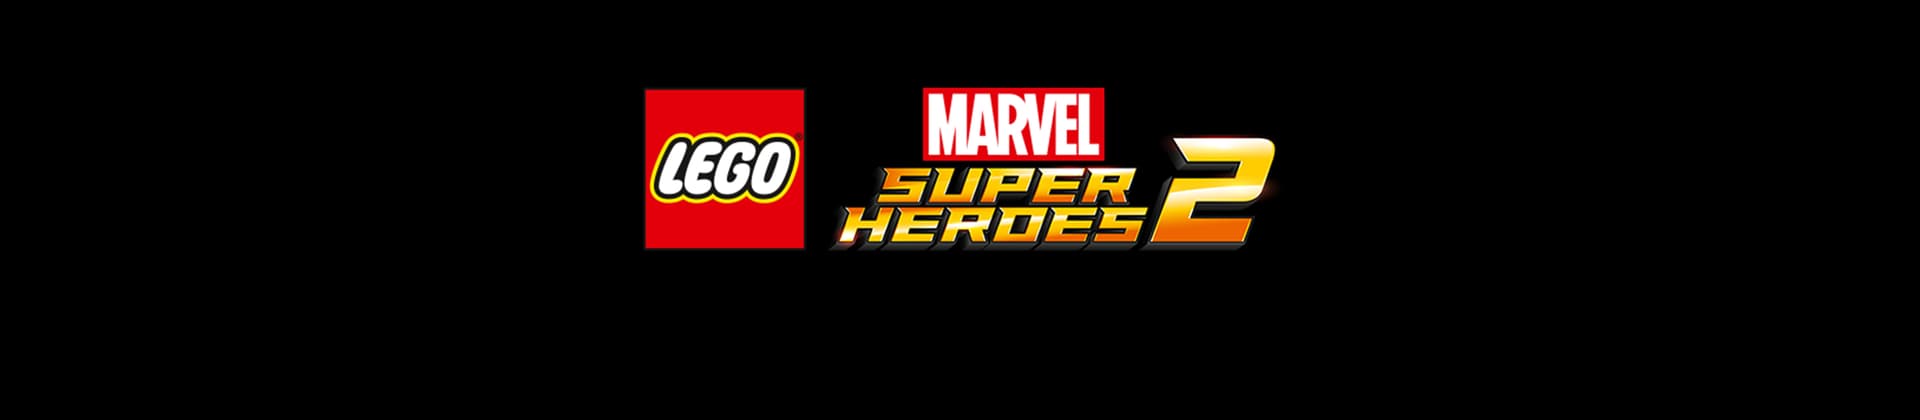 Lego Marvel Super Heroes 2